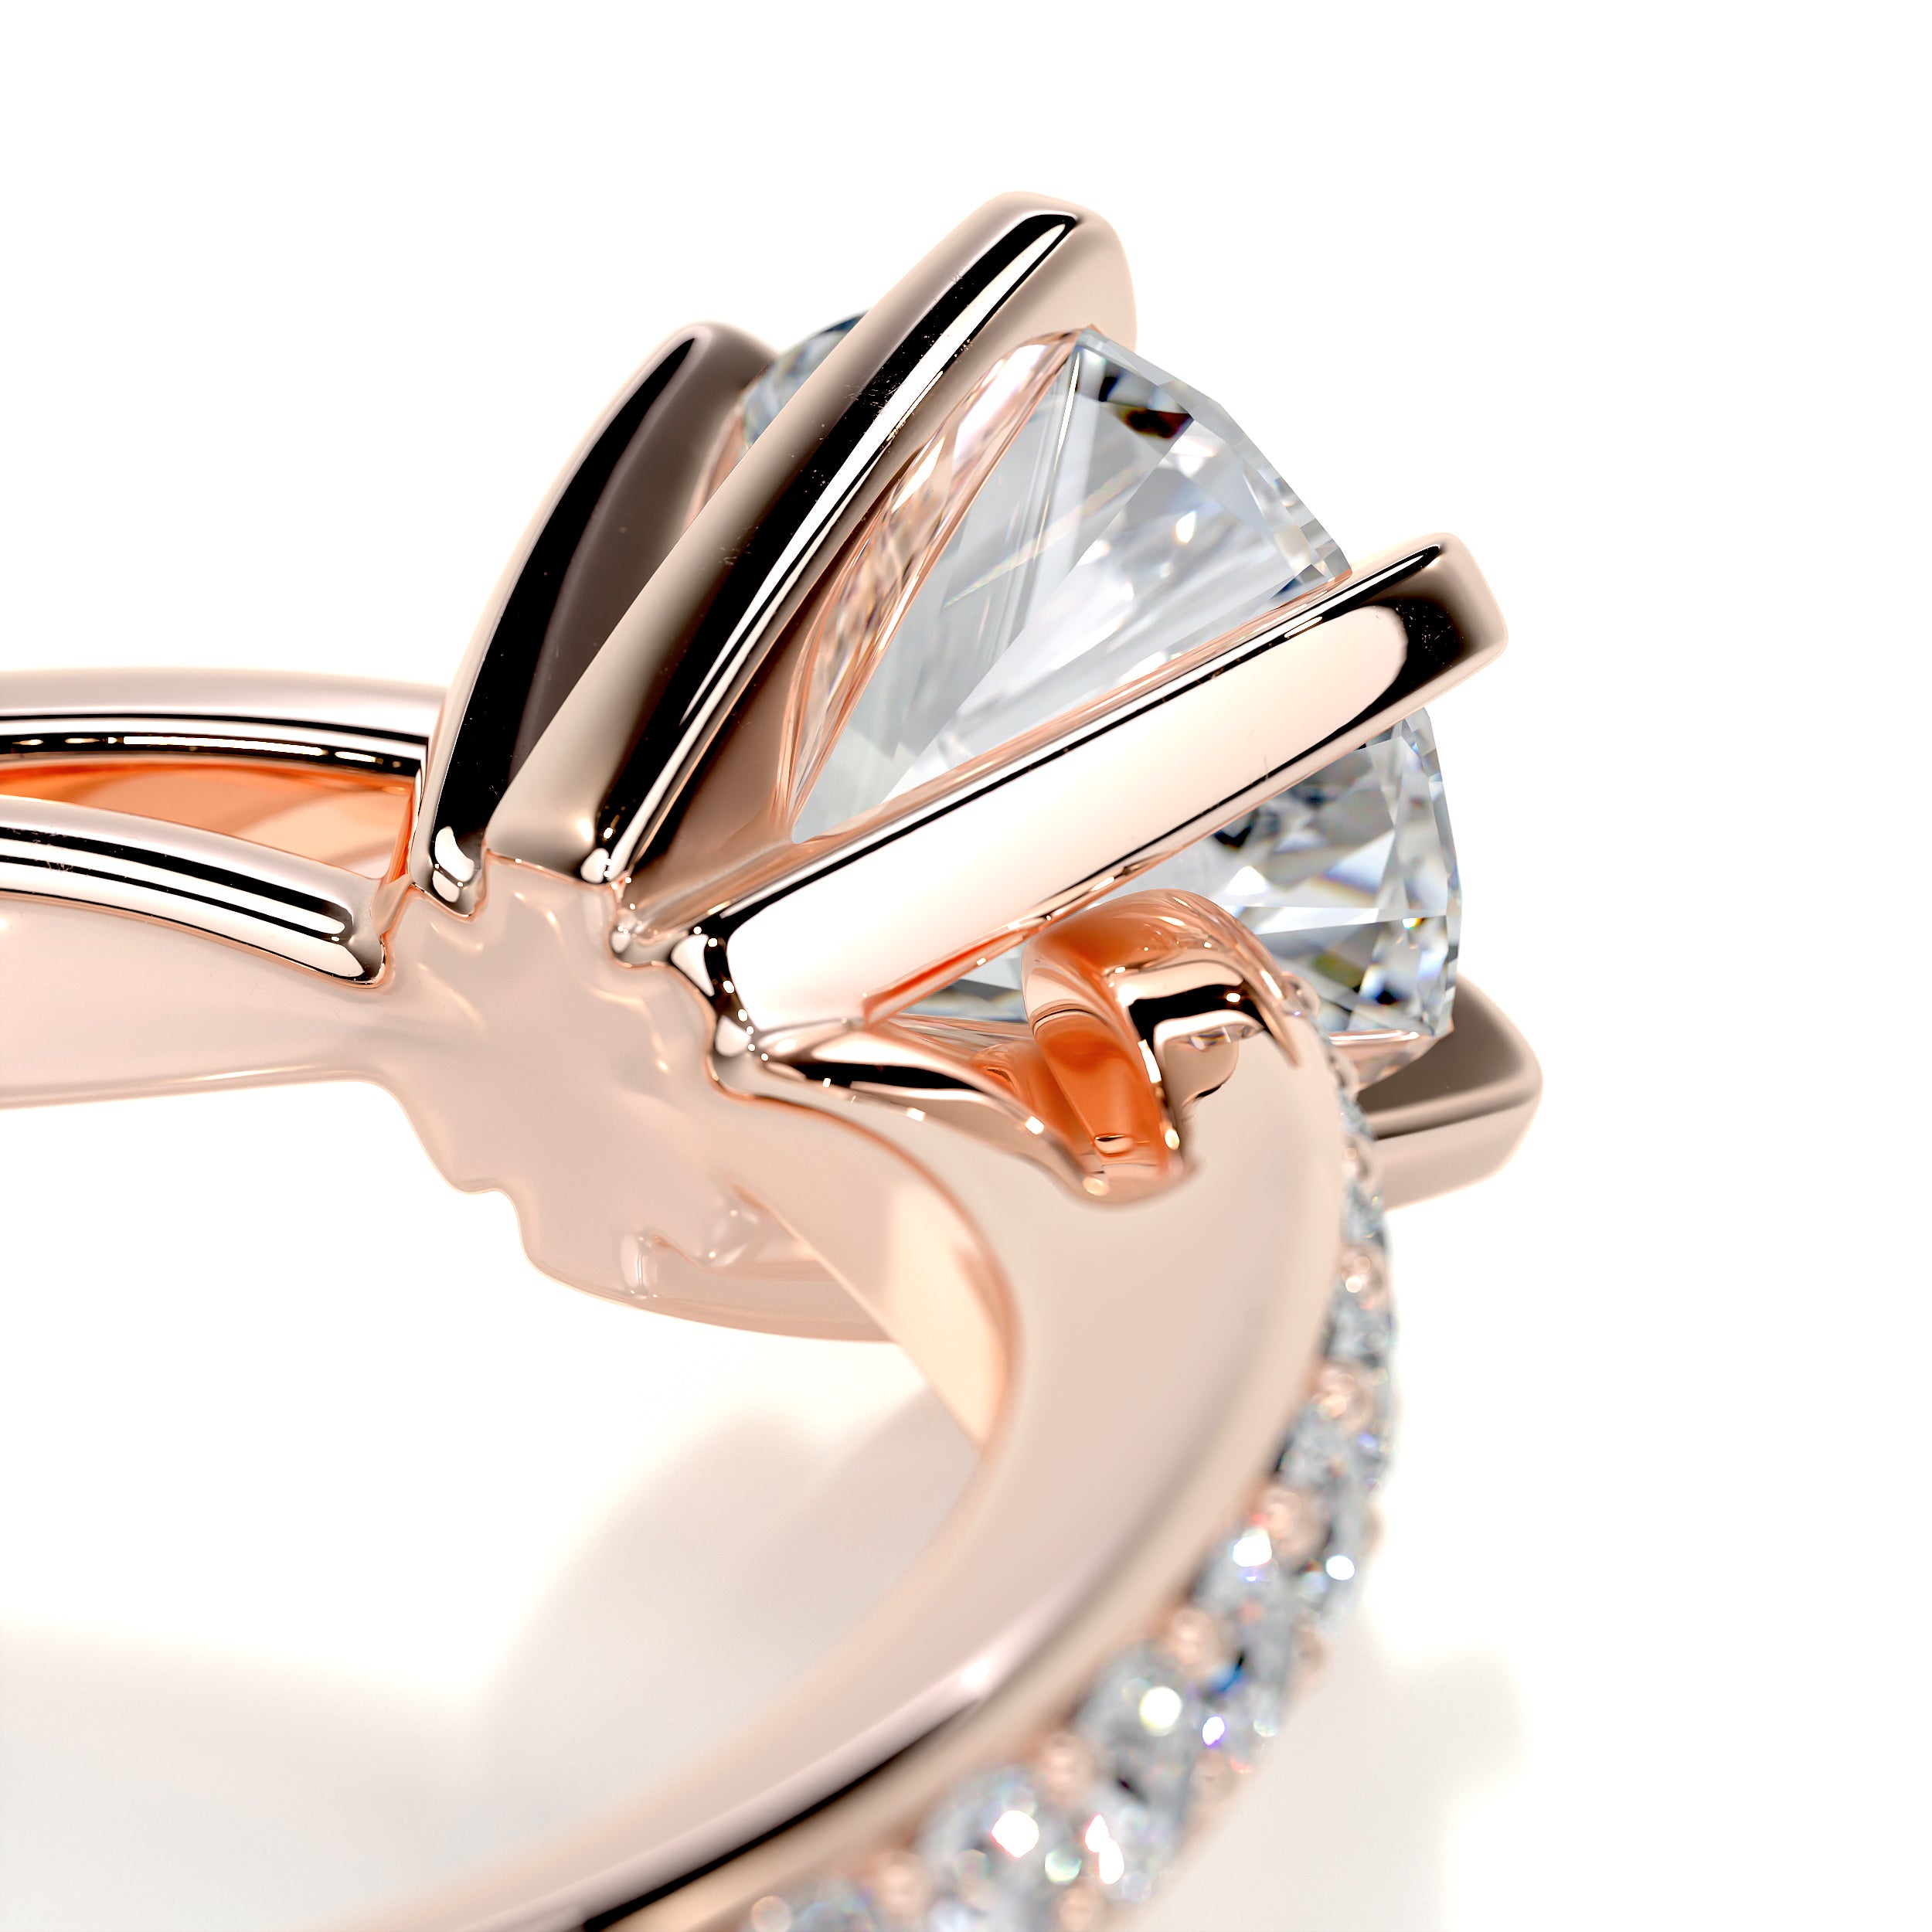 Talia Diamond Engagement Ring   (0.88 Carat) - 14K Rose Gold